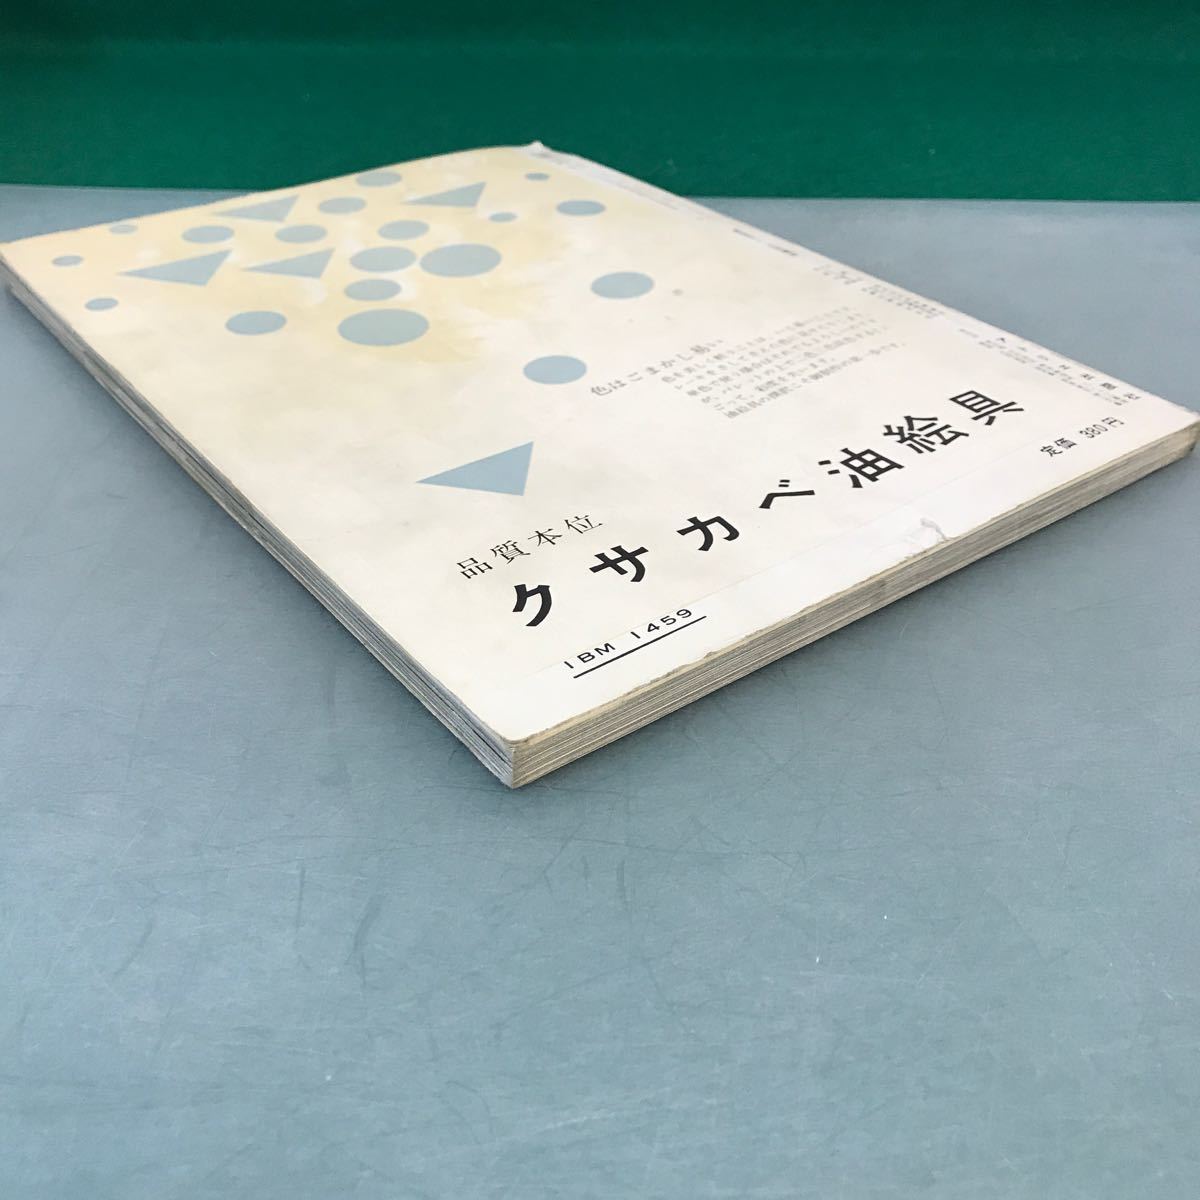 E53-028 separate volume marks lie46 higashi . blue . image. nude 